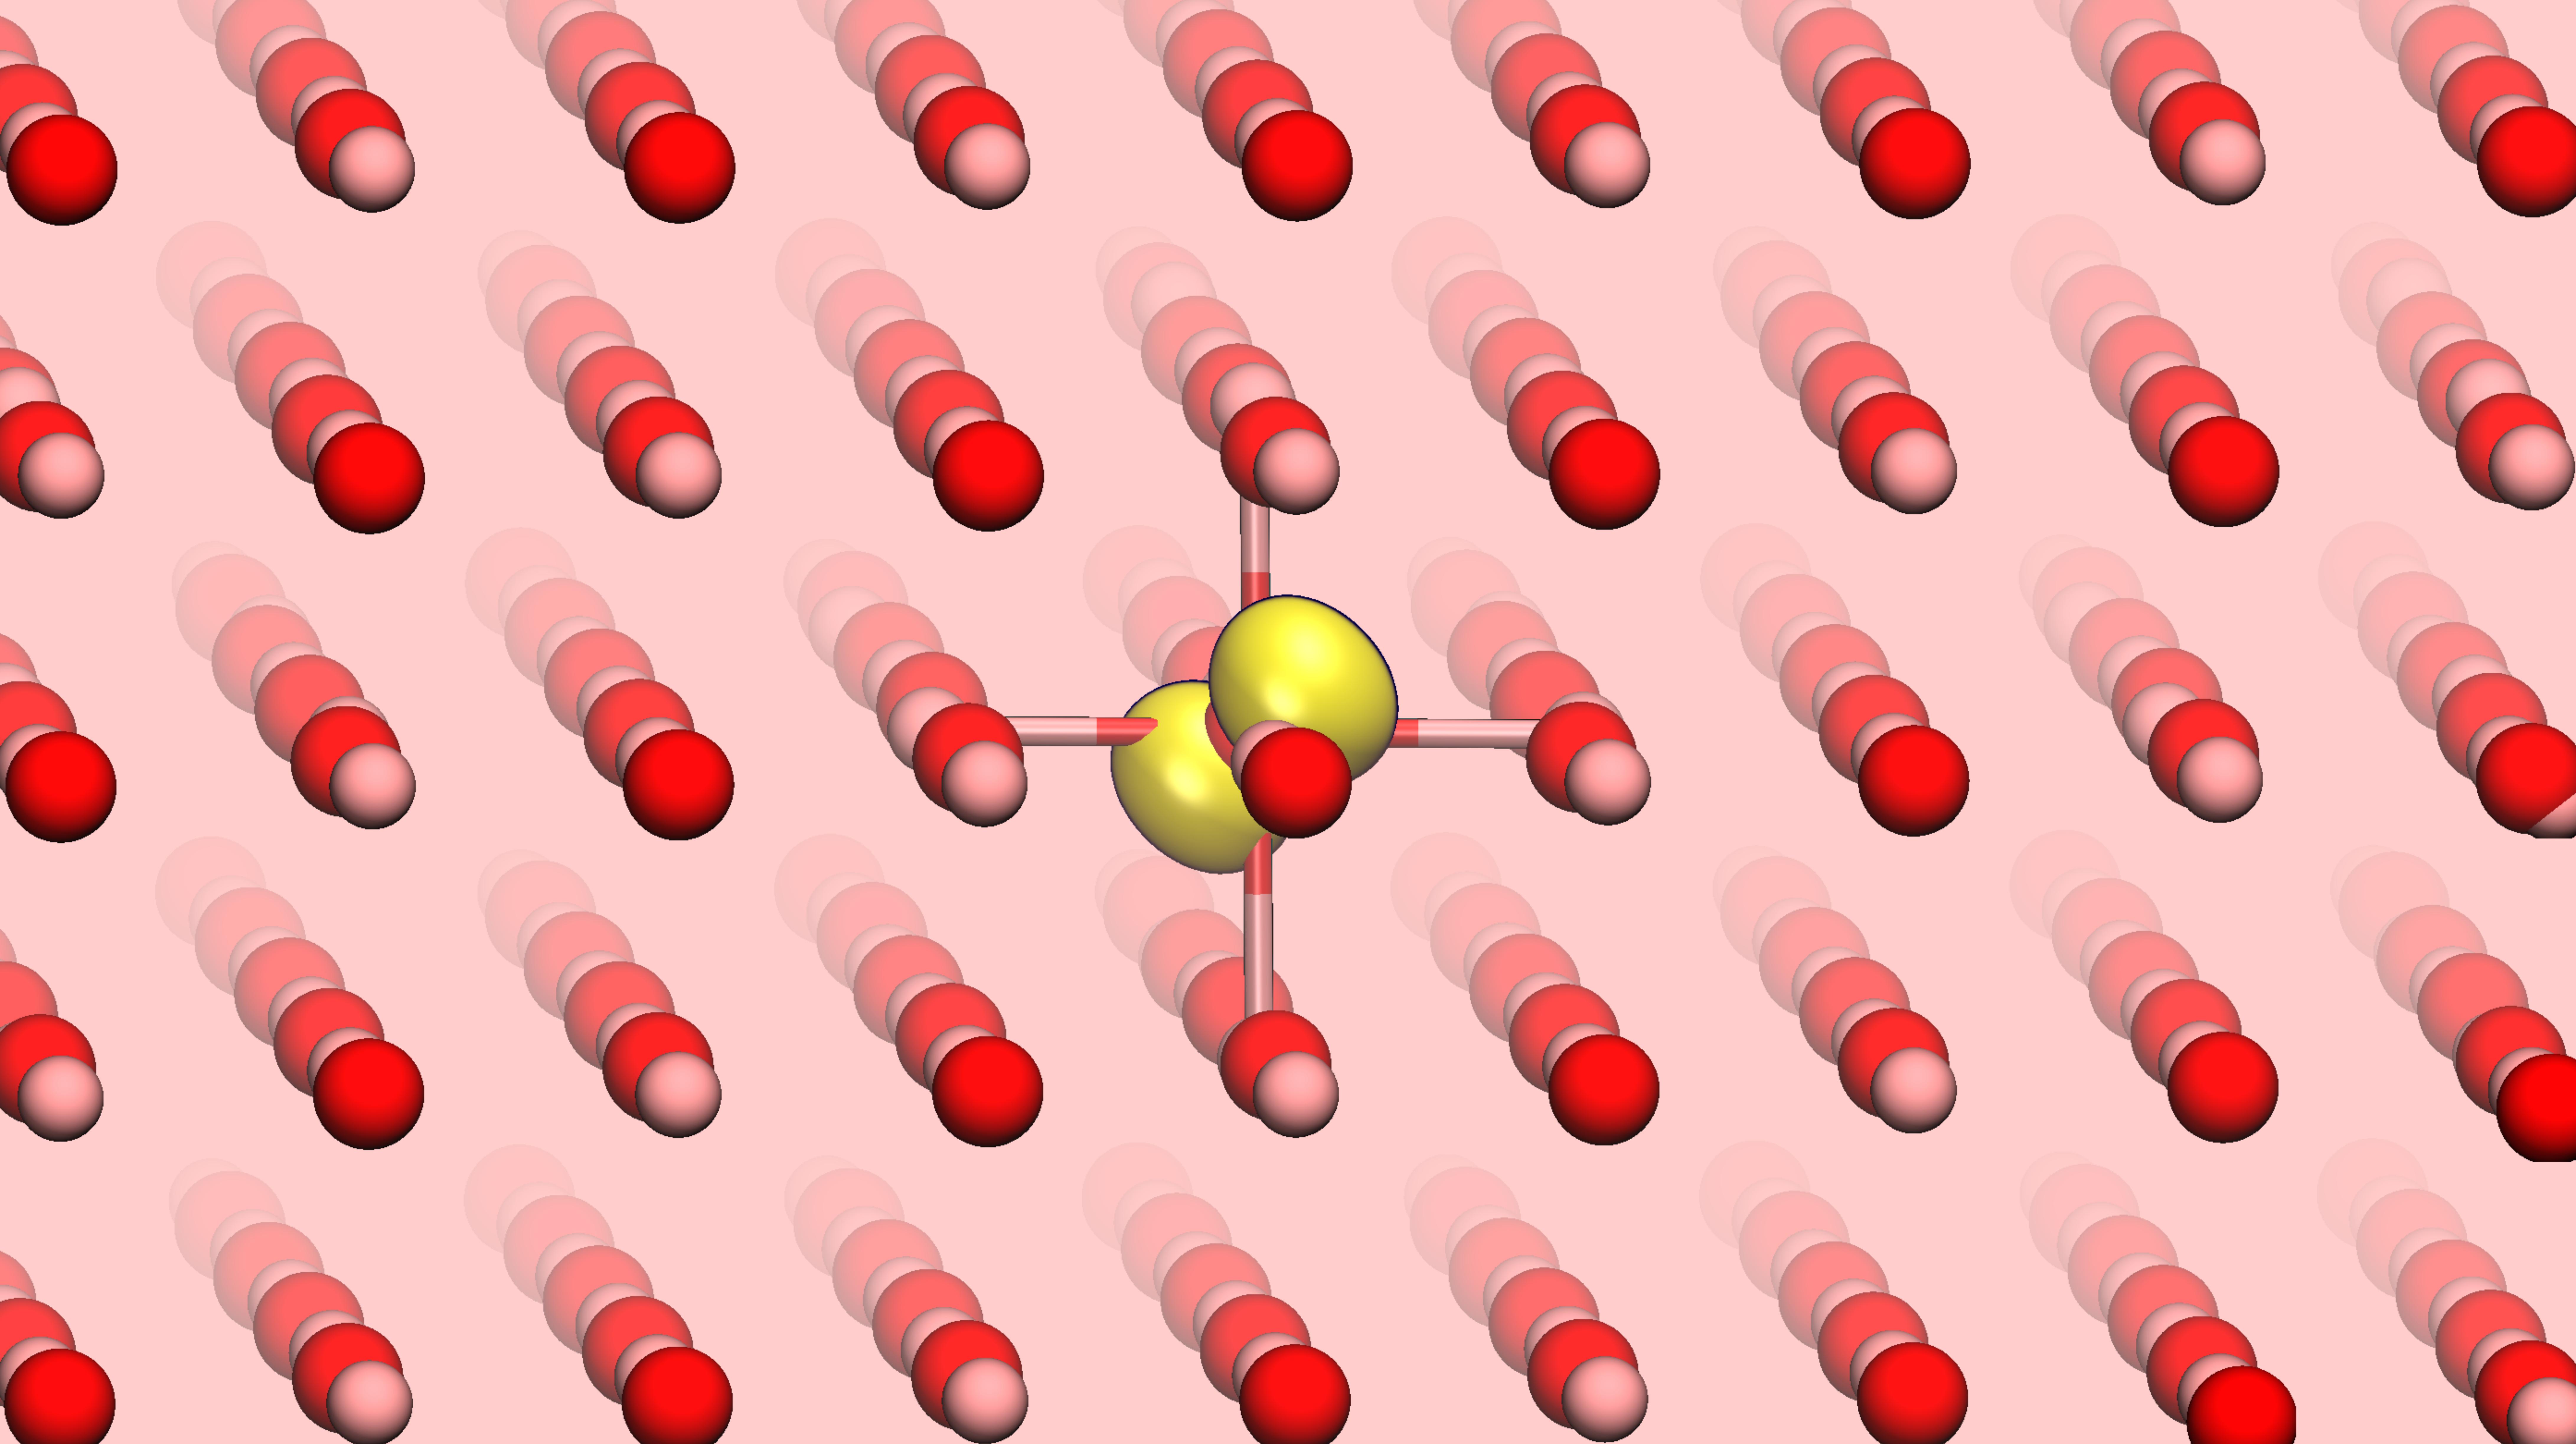 A polaron forming in magnesium oxide atoms. Credit: S. Falletta (EPFL)